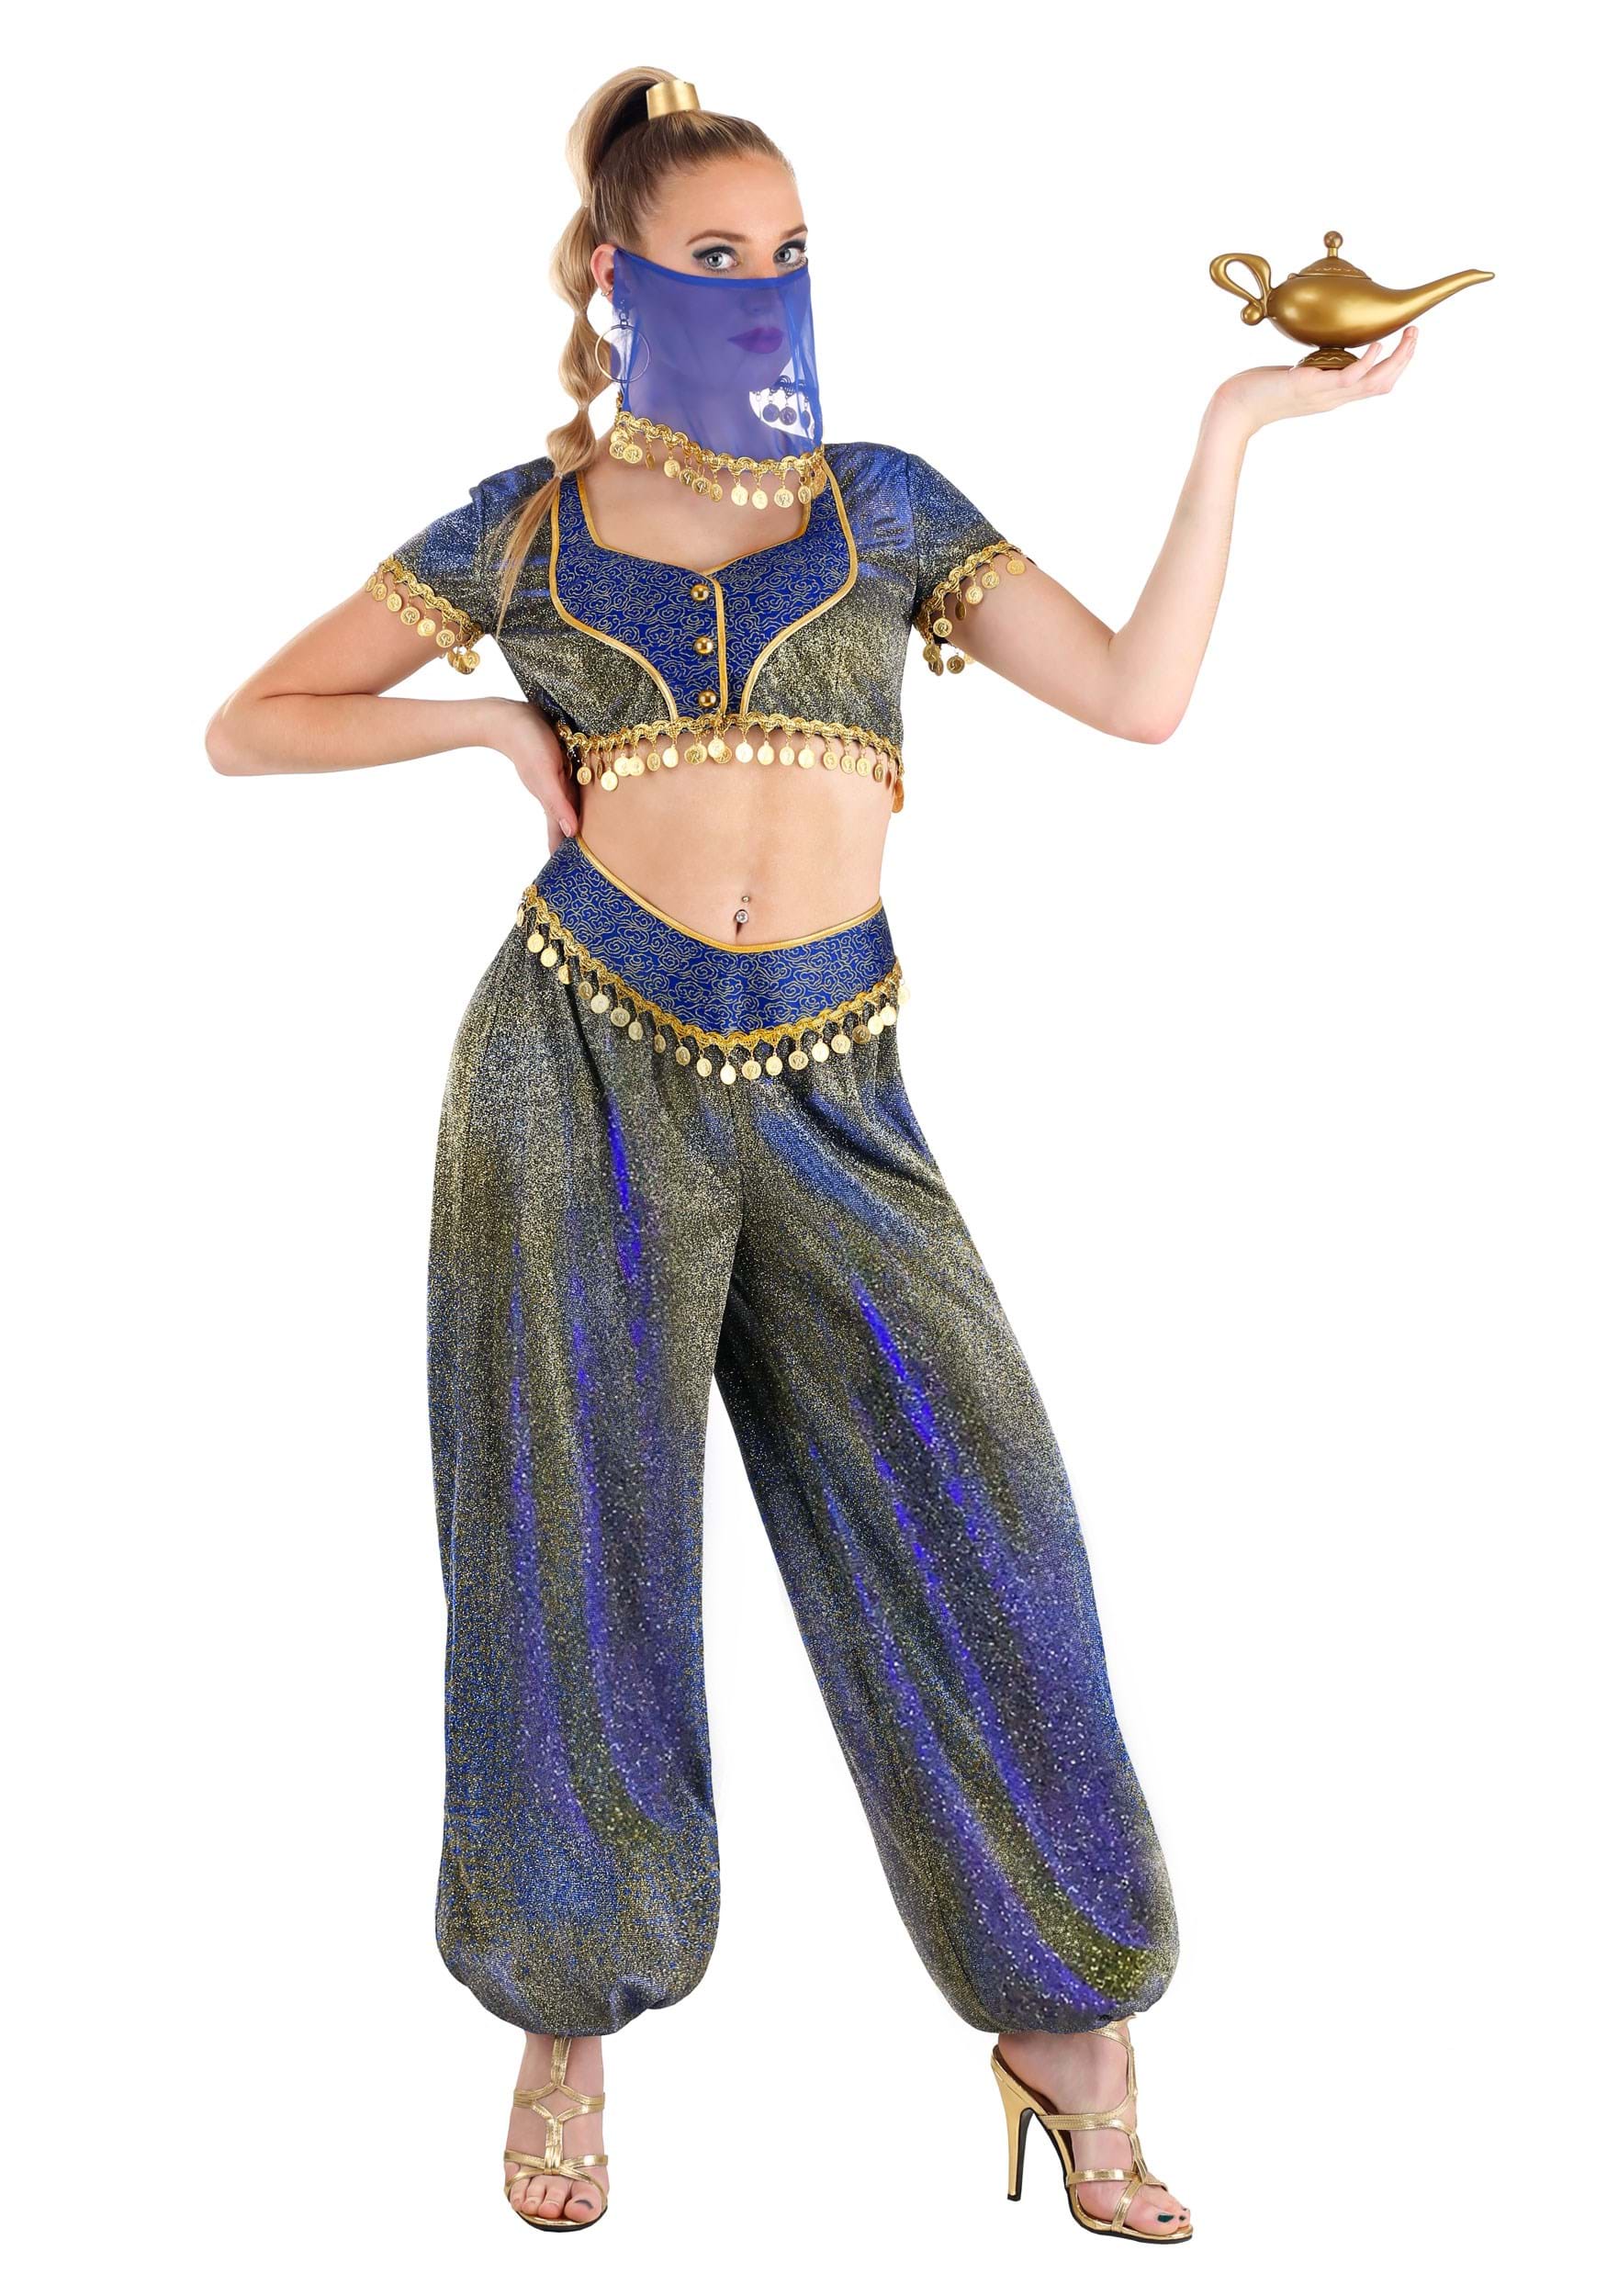 Adult Magical Genie Costume